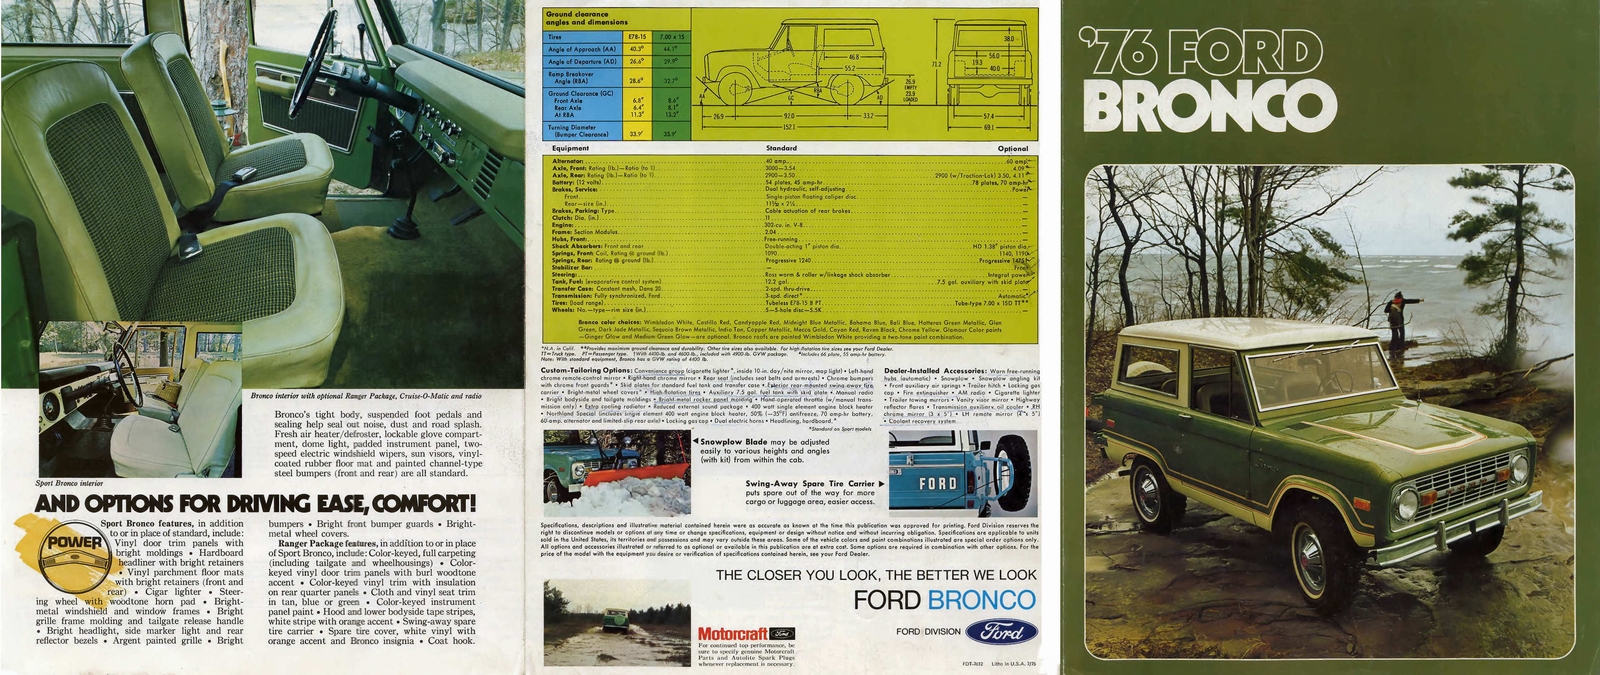 n_1976 Ford Bronco TriFold-01-02-03.jpg